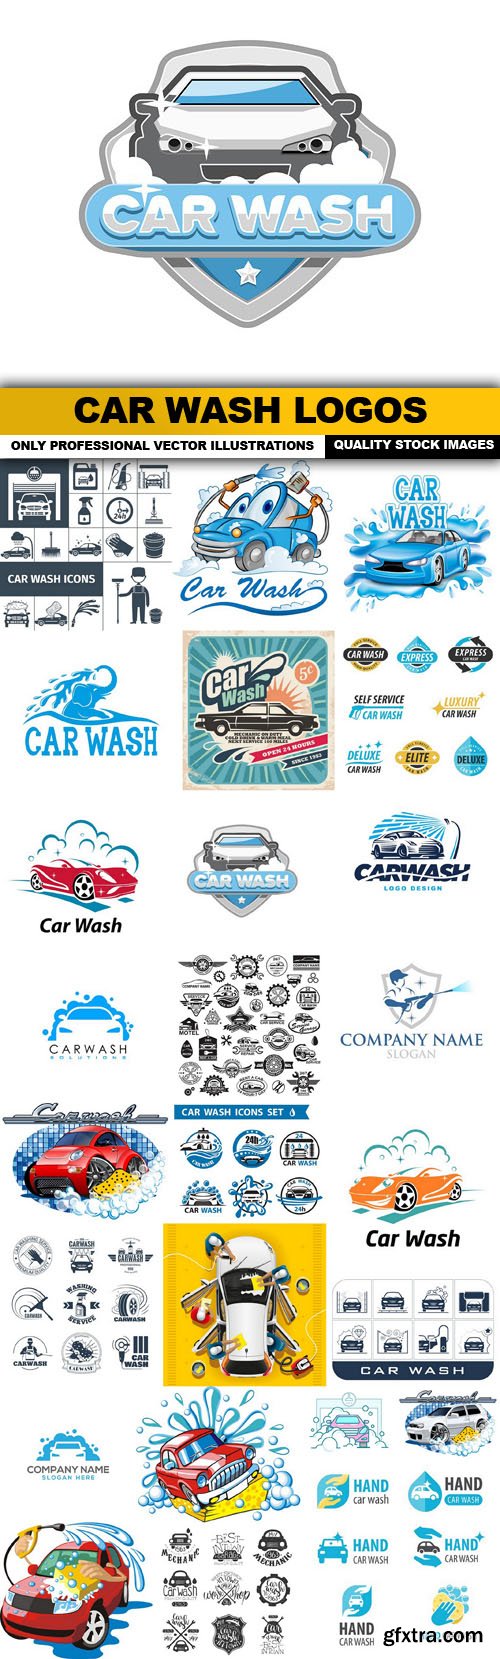 Car Wash Logos - 25 Vector